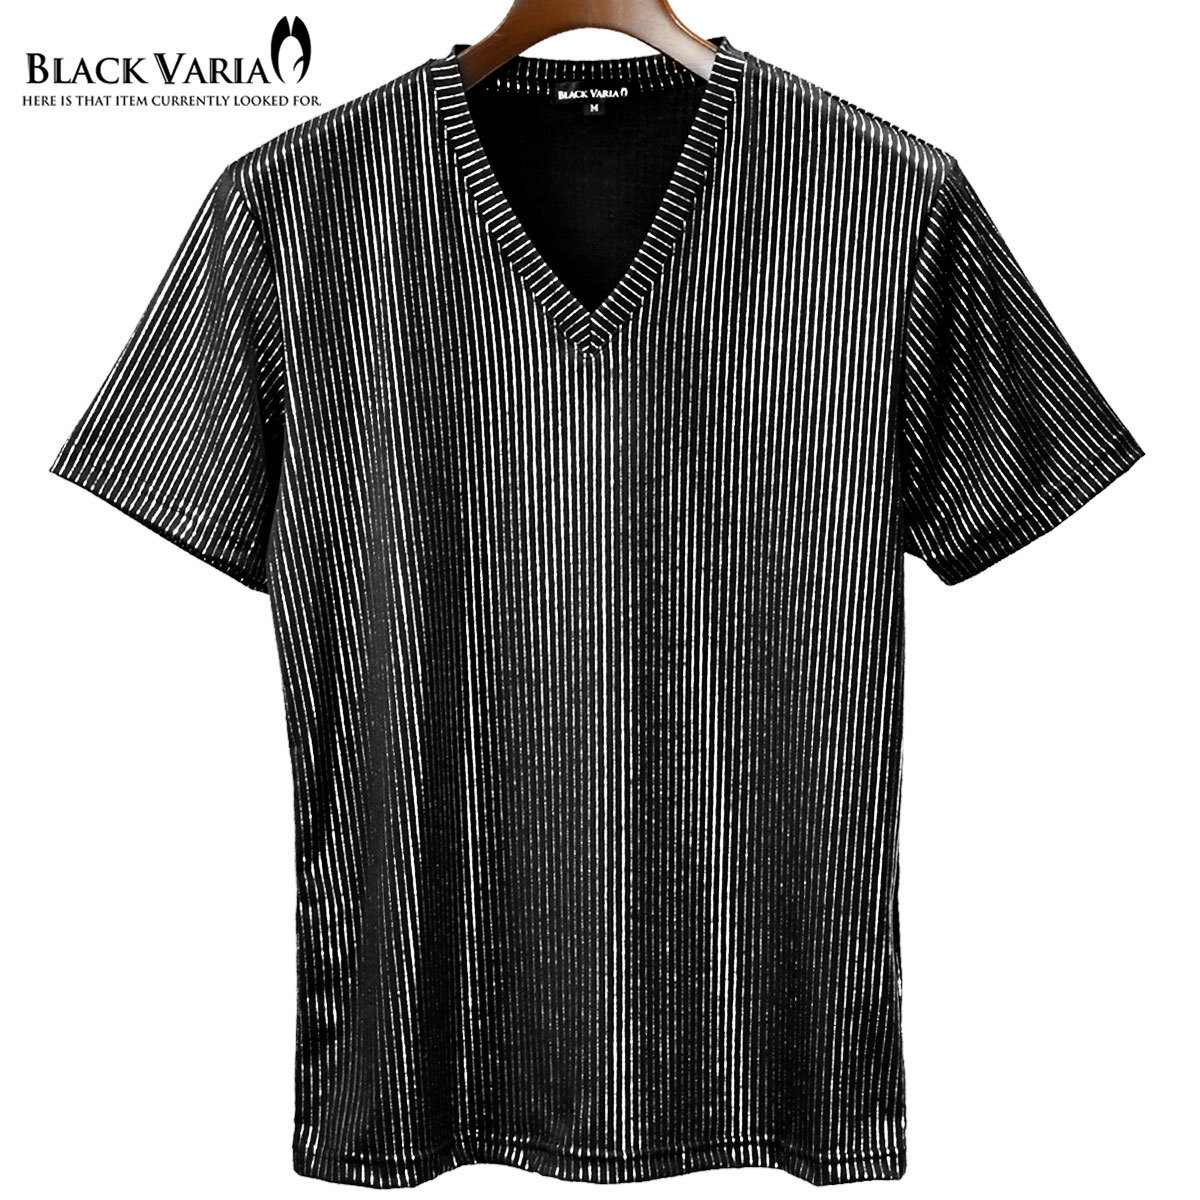 9#193213-sibk BLACK VARIA ピンストライプ ラメ ストレッチ 半袖 Vネック Tシャツ メンズ(ブラック黒・ライン銀シルバー) M ダンス 舞台_画像6